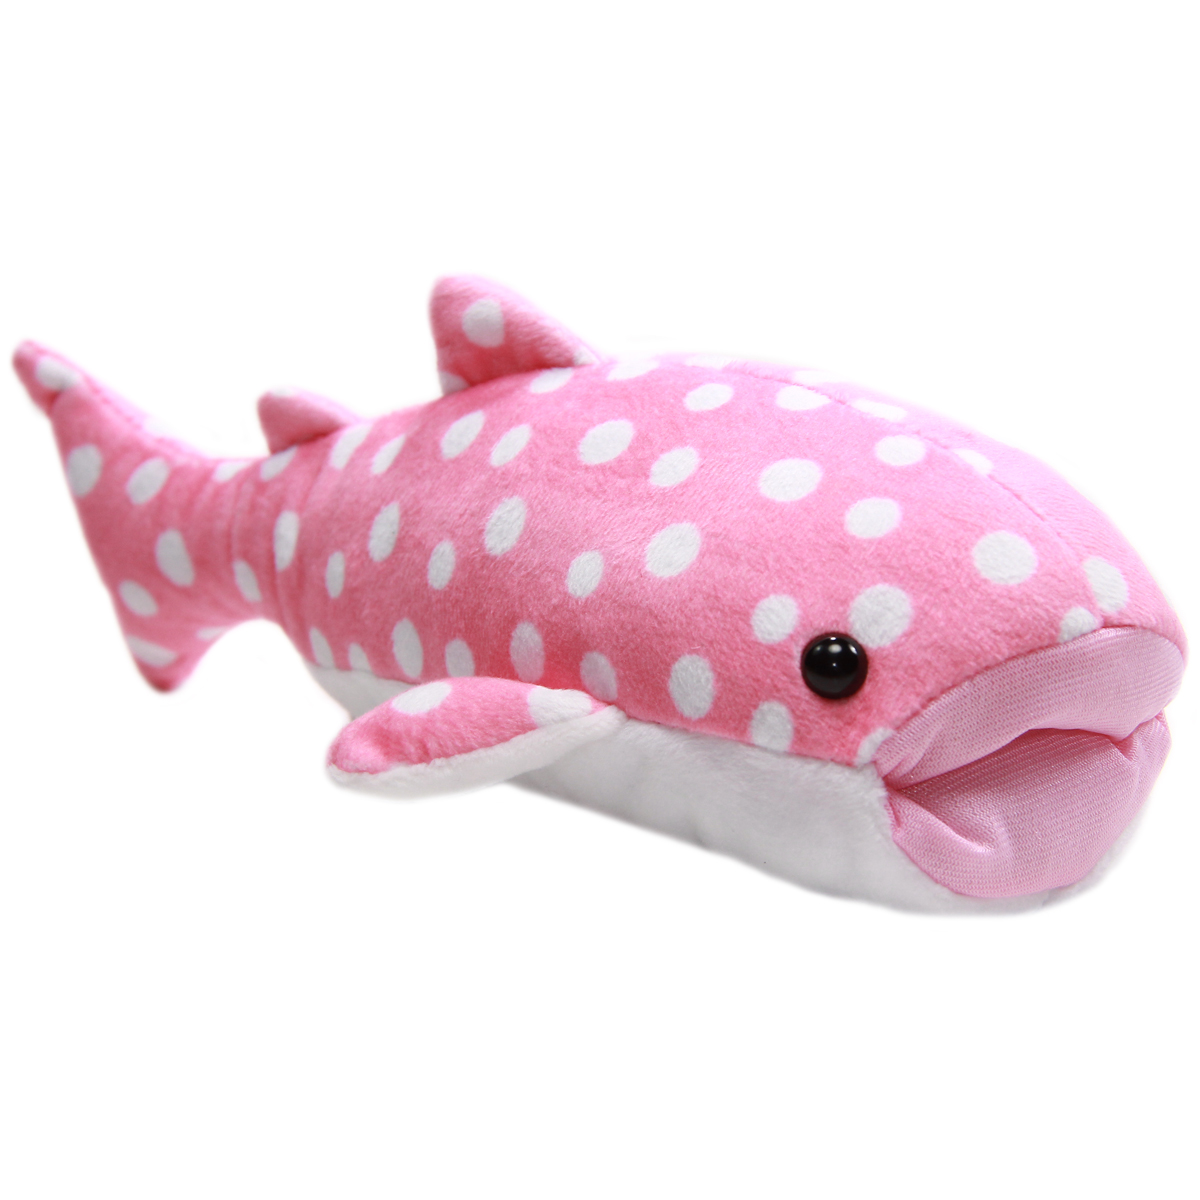 Whale Shark Plushie Soft Stuffed Animal Pink White Dot Kawaii Small Keychain NEW 